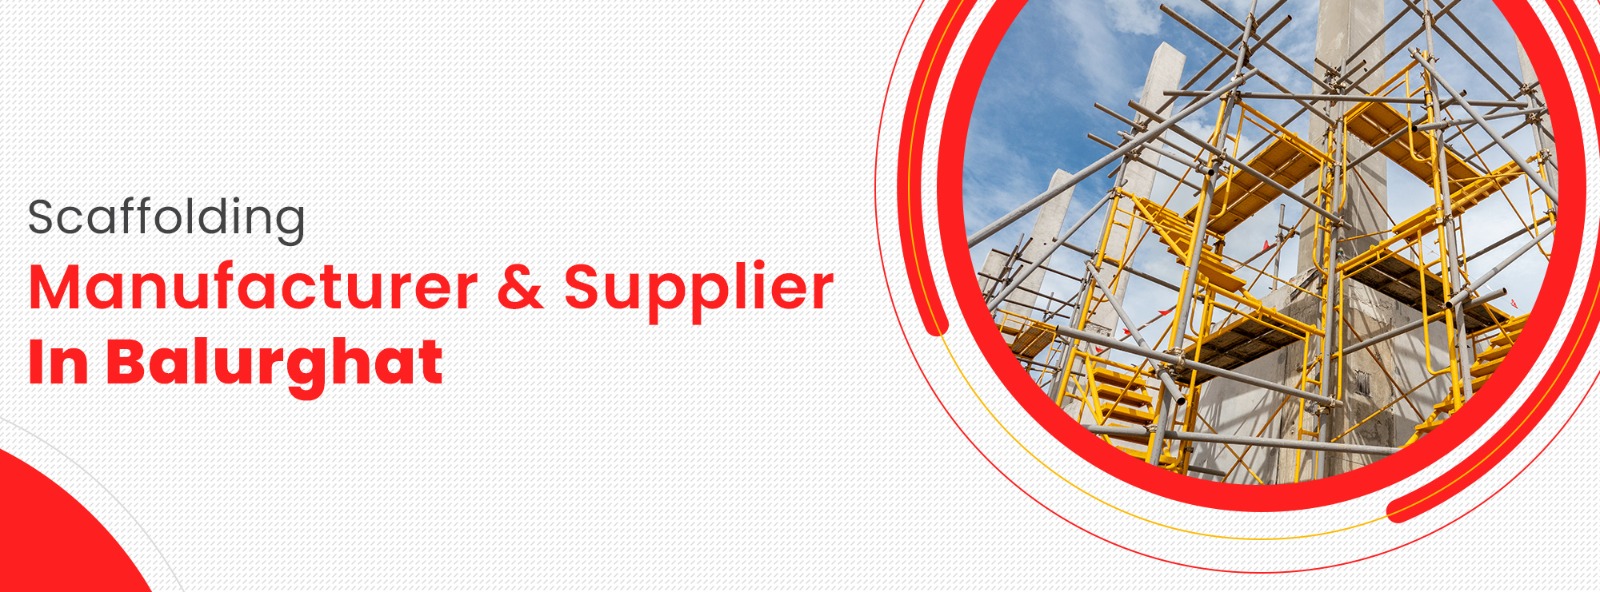 Scaffolding Manufacturer & Supplier In Balurghat